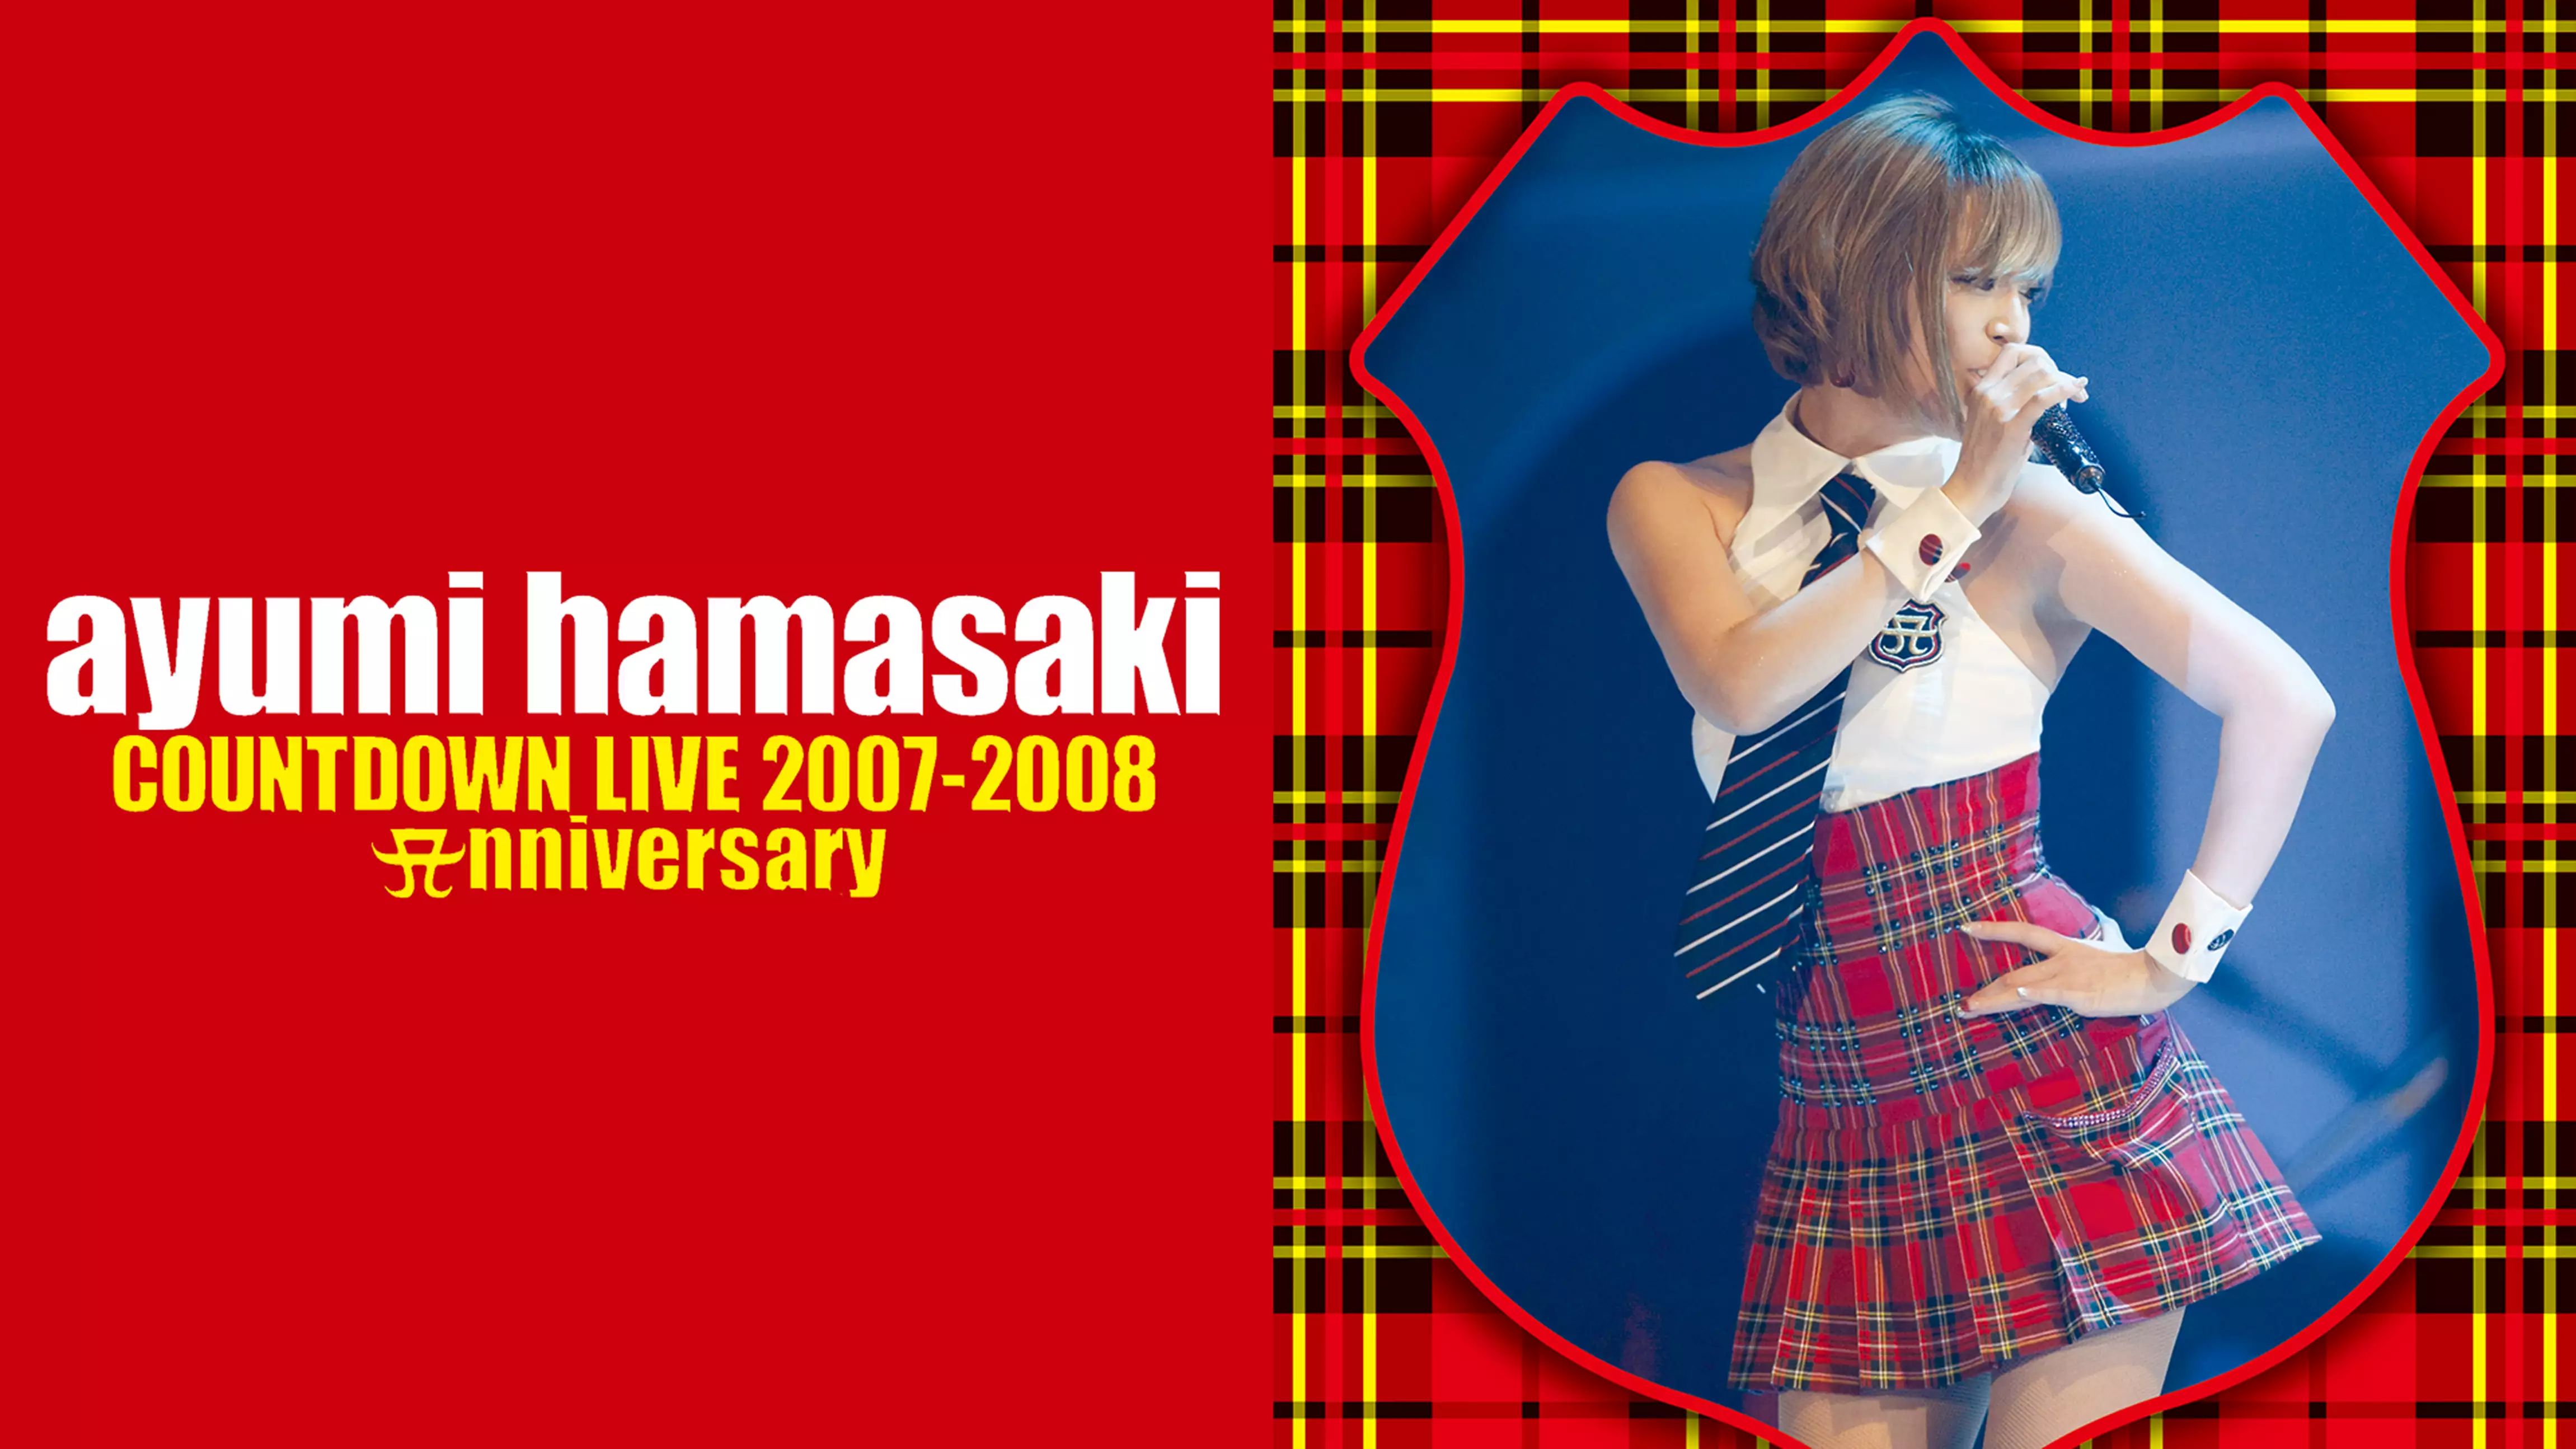 ayumi hamasaki COUNTDOWN LIVE 2007-2008 Anniversary(音楽・アイドル 